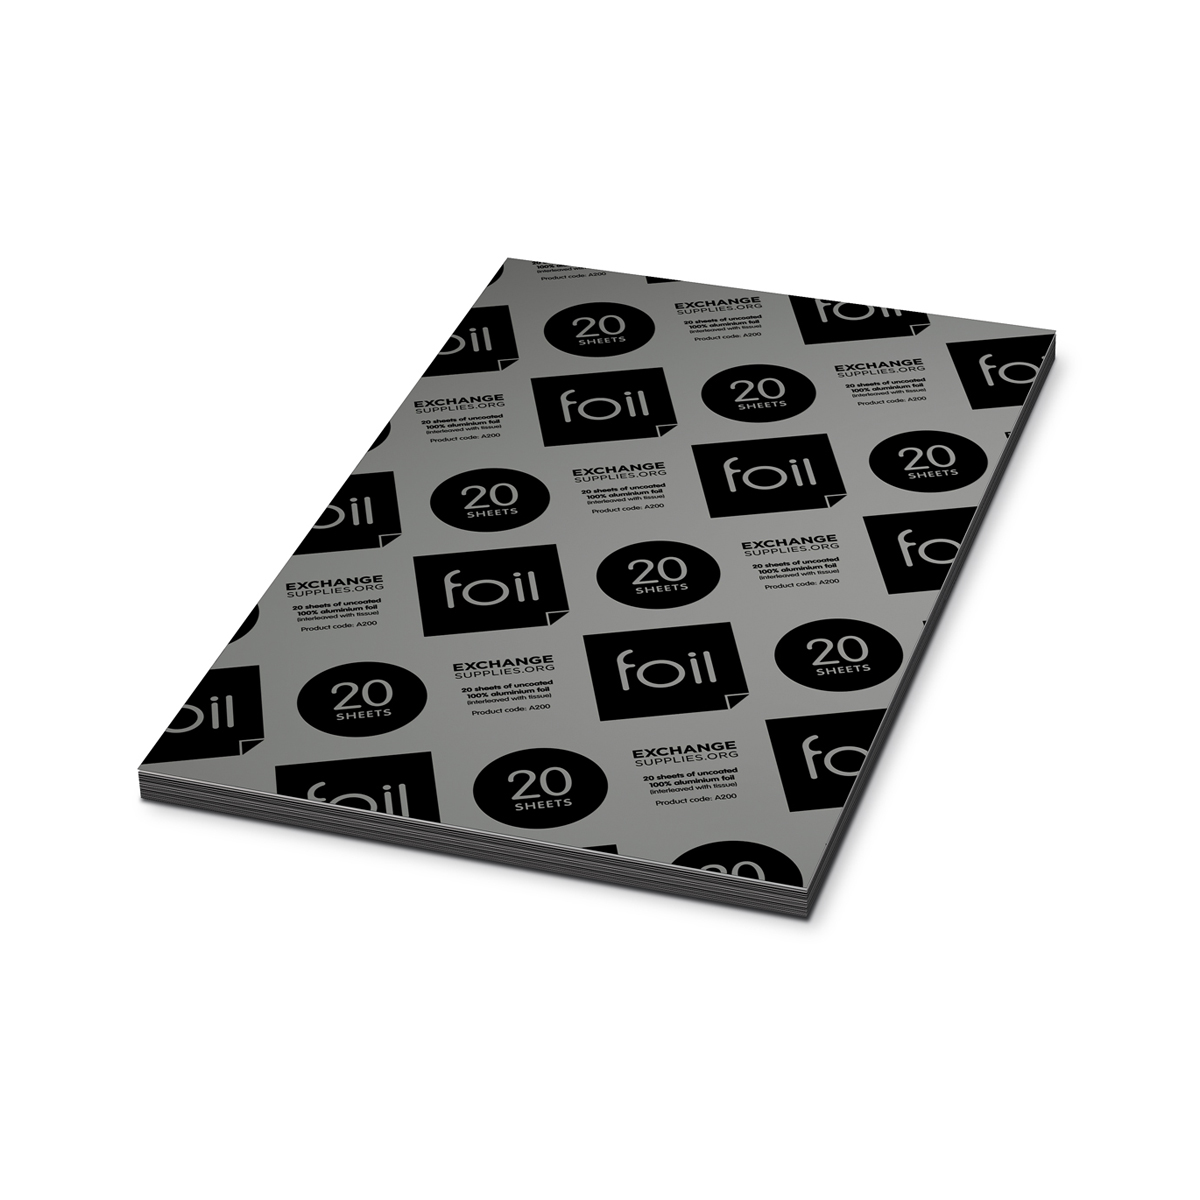 Foil: pack of 20 sheets